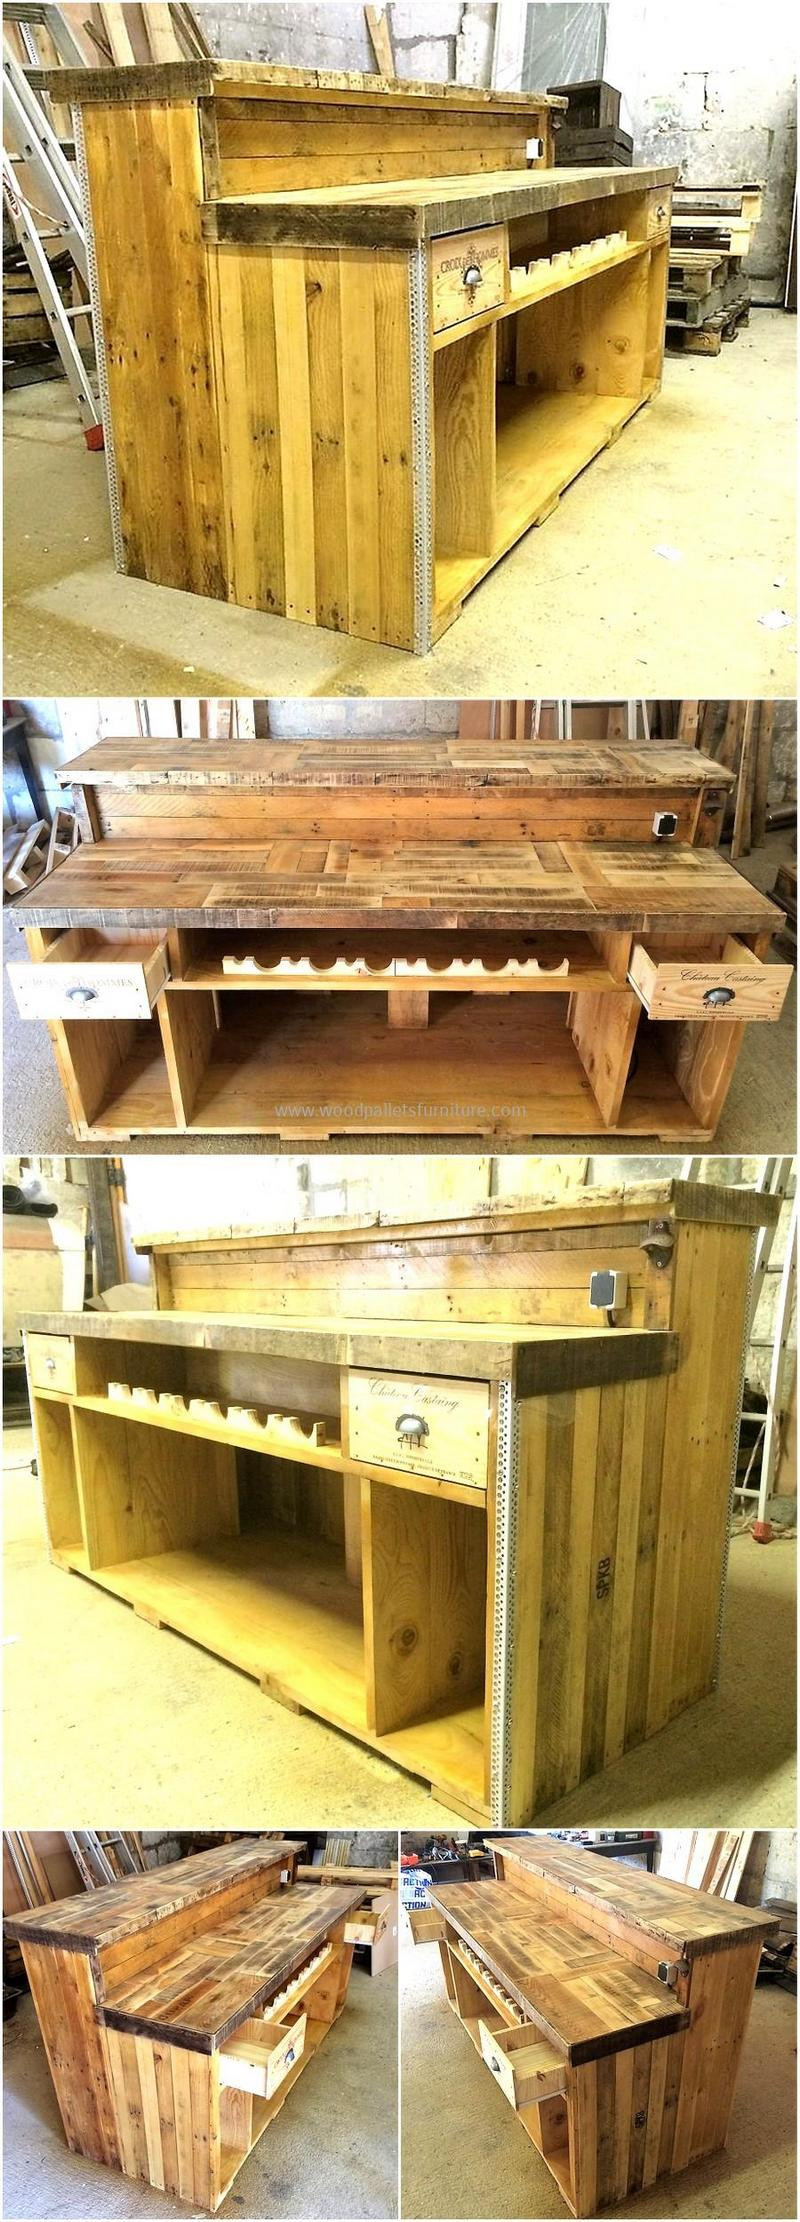 DIY Pallet Bar Plans
 200 DIY Ideas for Wood Pallet Bars